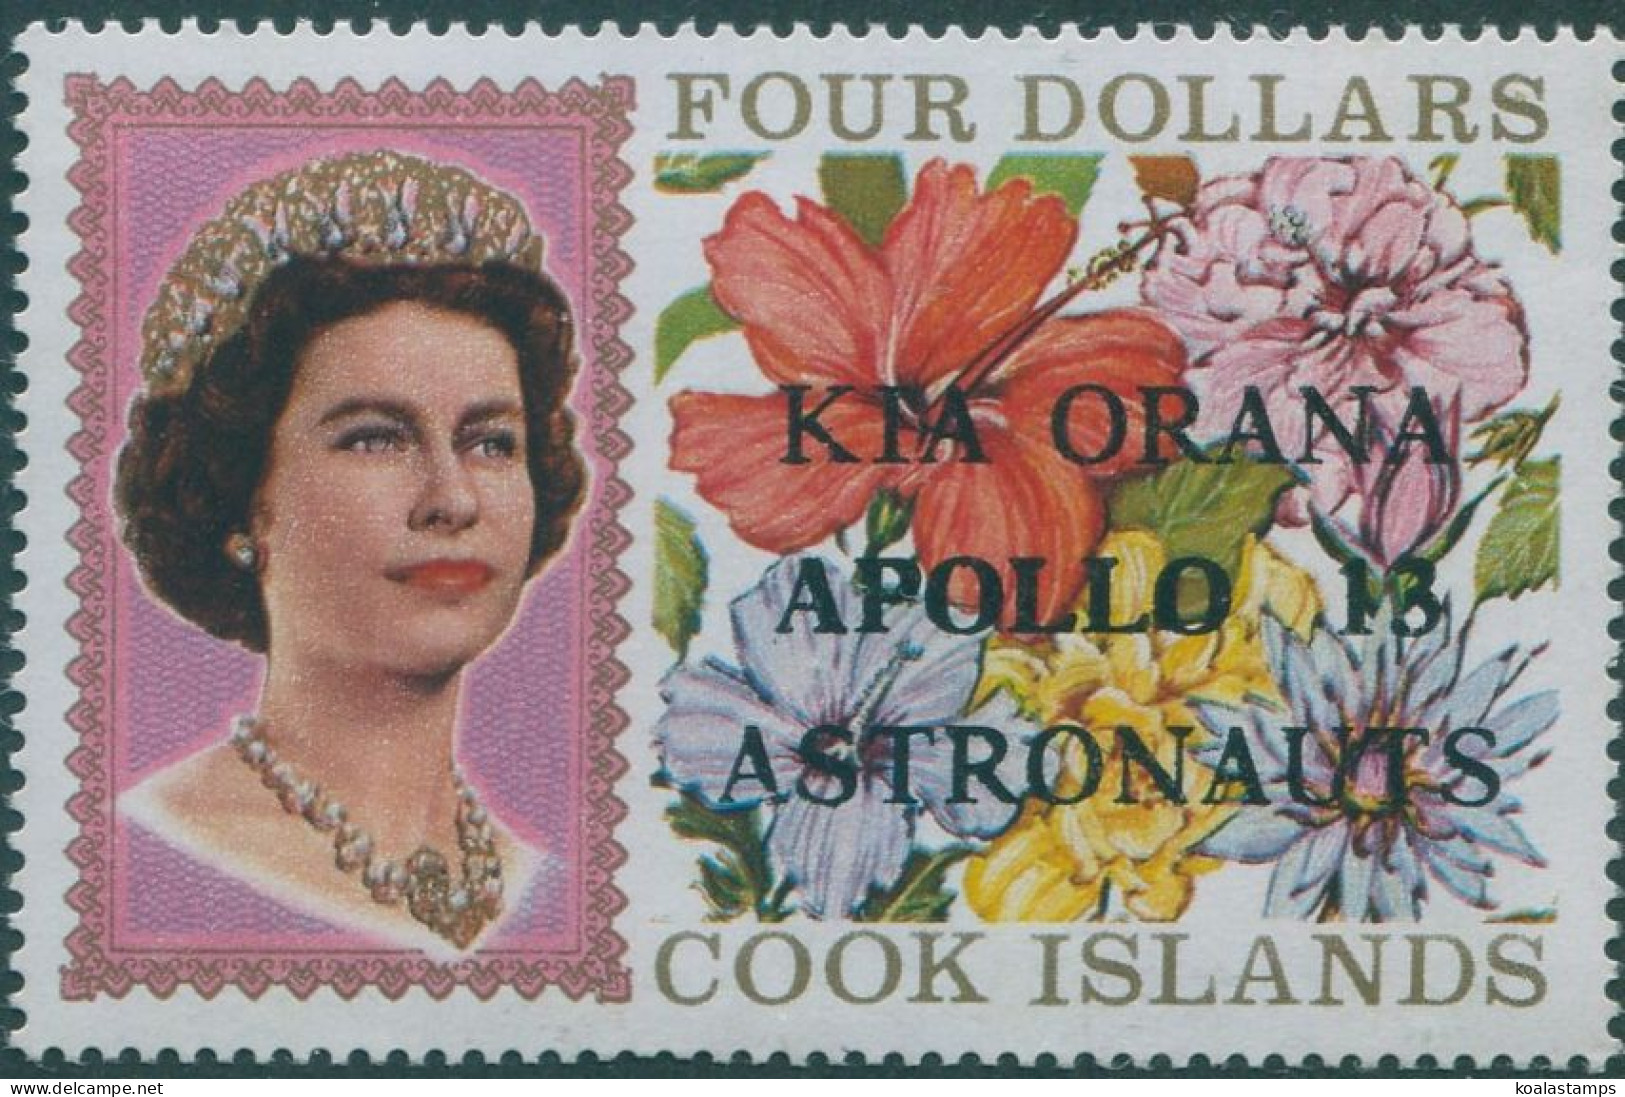 Cook Islands 1970 SG327 $4 QEII Flowers KIA ORANA APOLLO 13 ASTRONAUTS Ovpt MNH - Cookeilanden